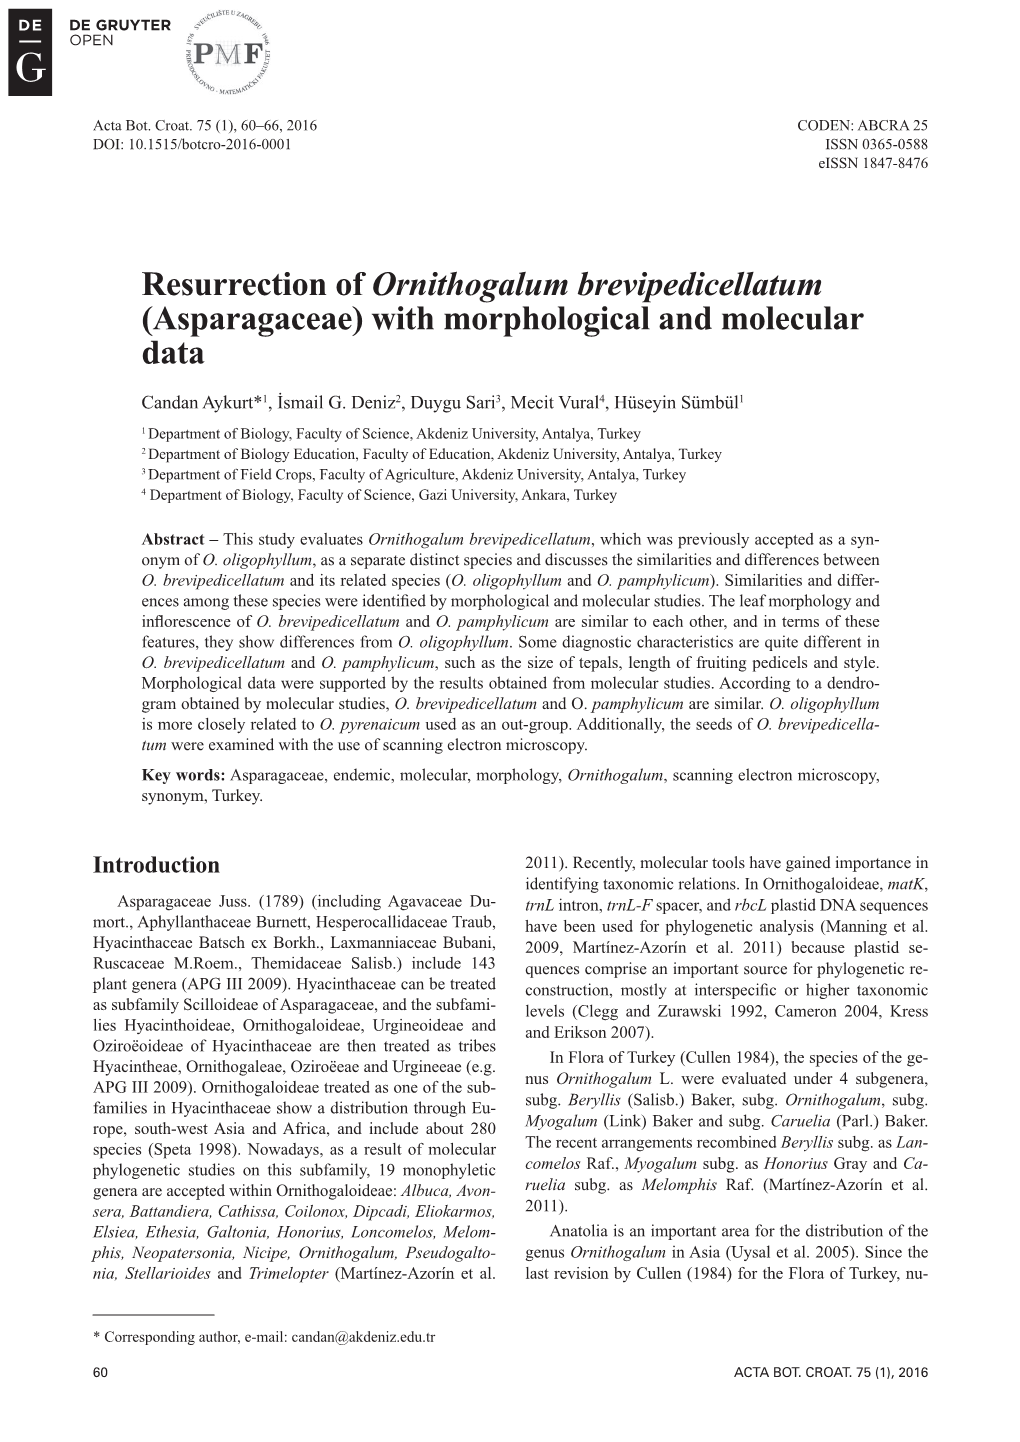 Resurrection of Ornithogalum Brevipedicellatum (Asparagaceae) with Morphological and Molecular Data